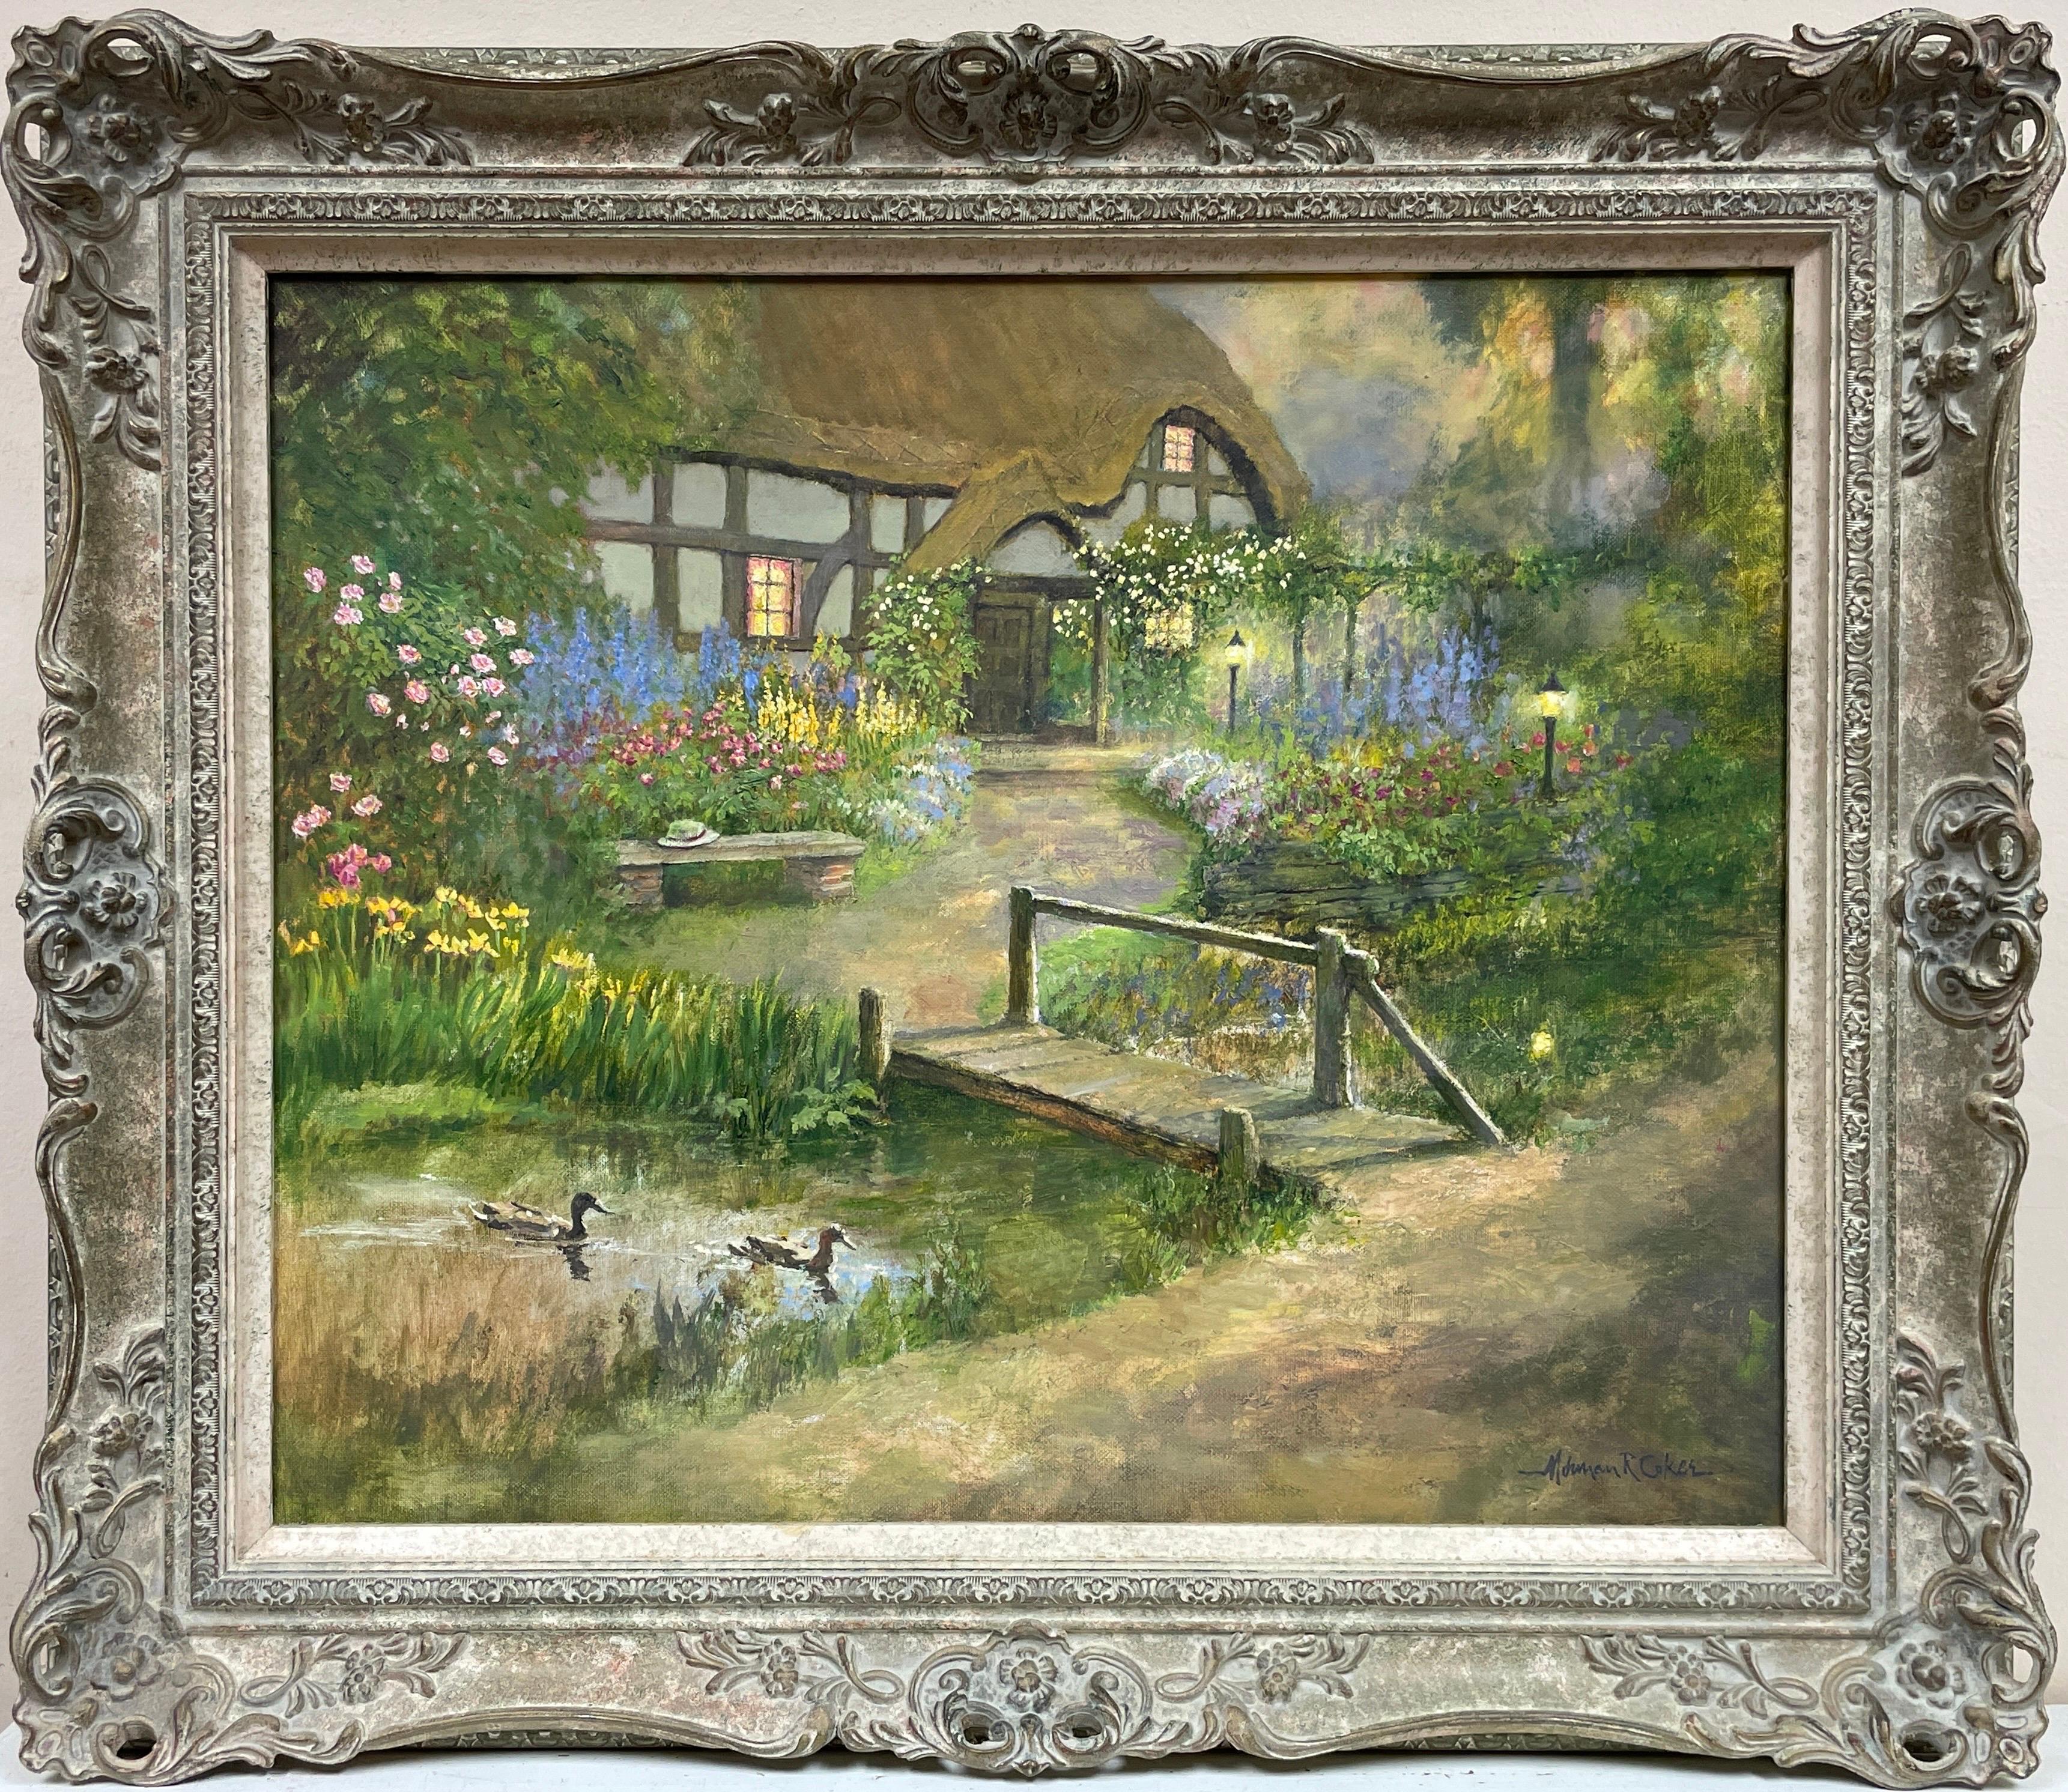 Large British Impressionist Oil Painting Country Cottage Flower Garden & Ducks